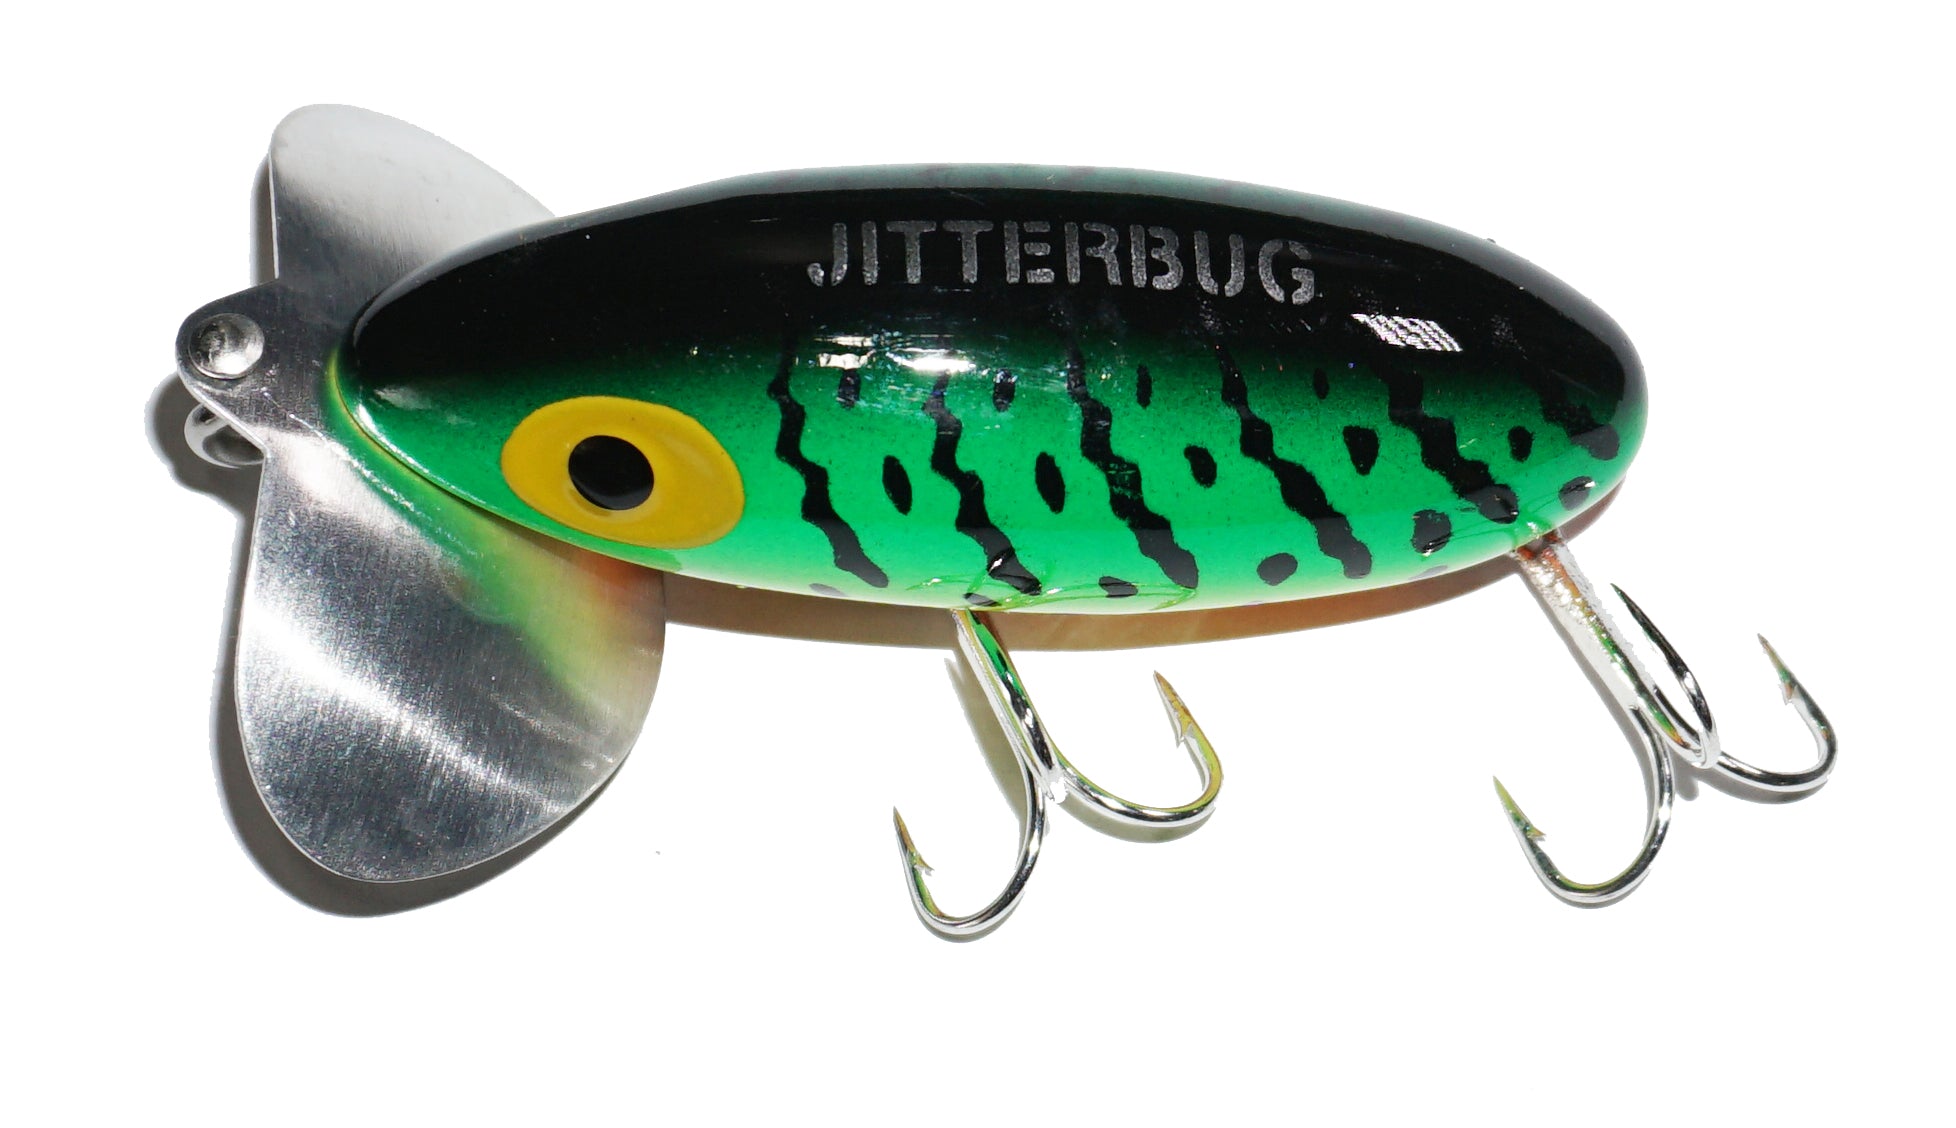 WATER FISHING LURE, Jitterbug Top, Black -0141-2728 $33.18